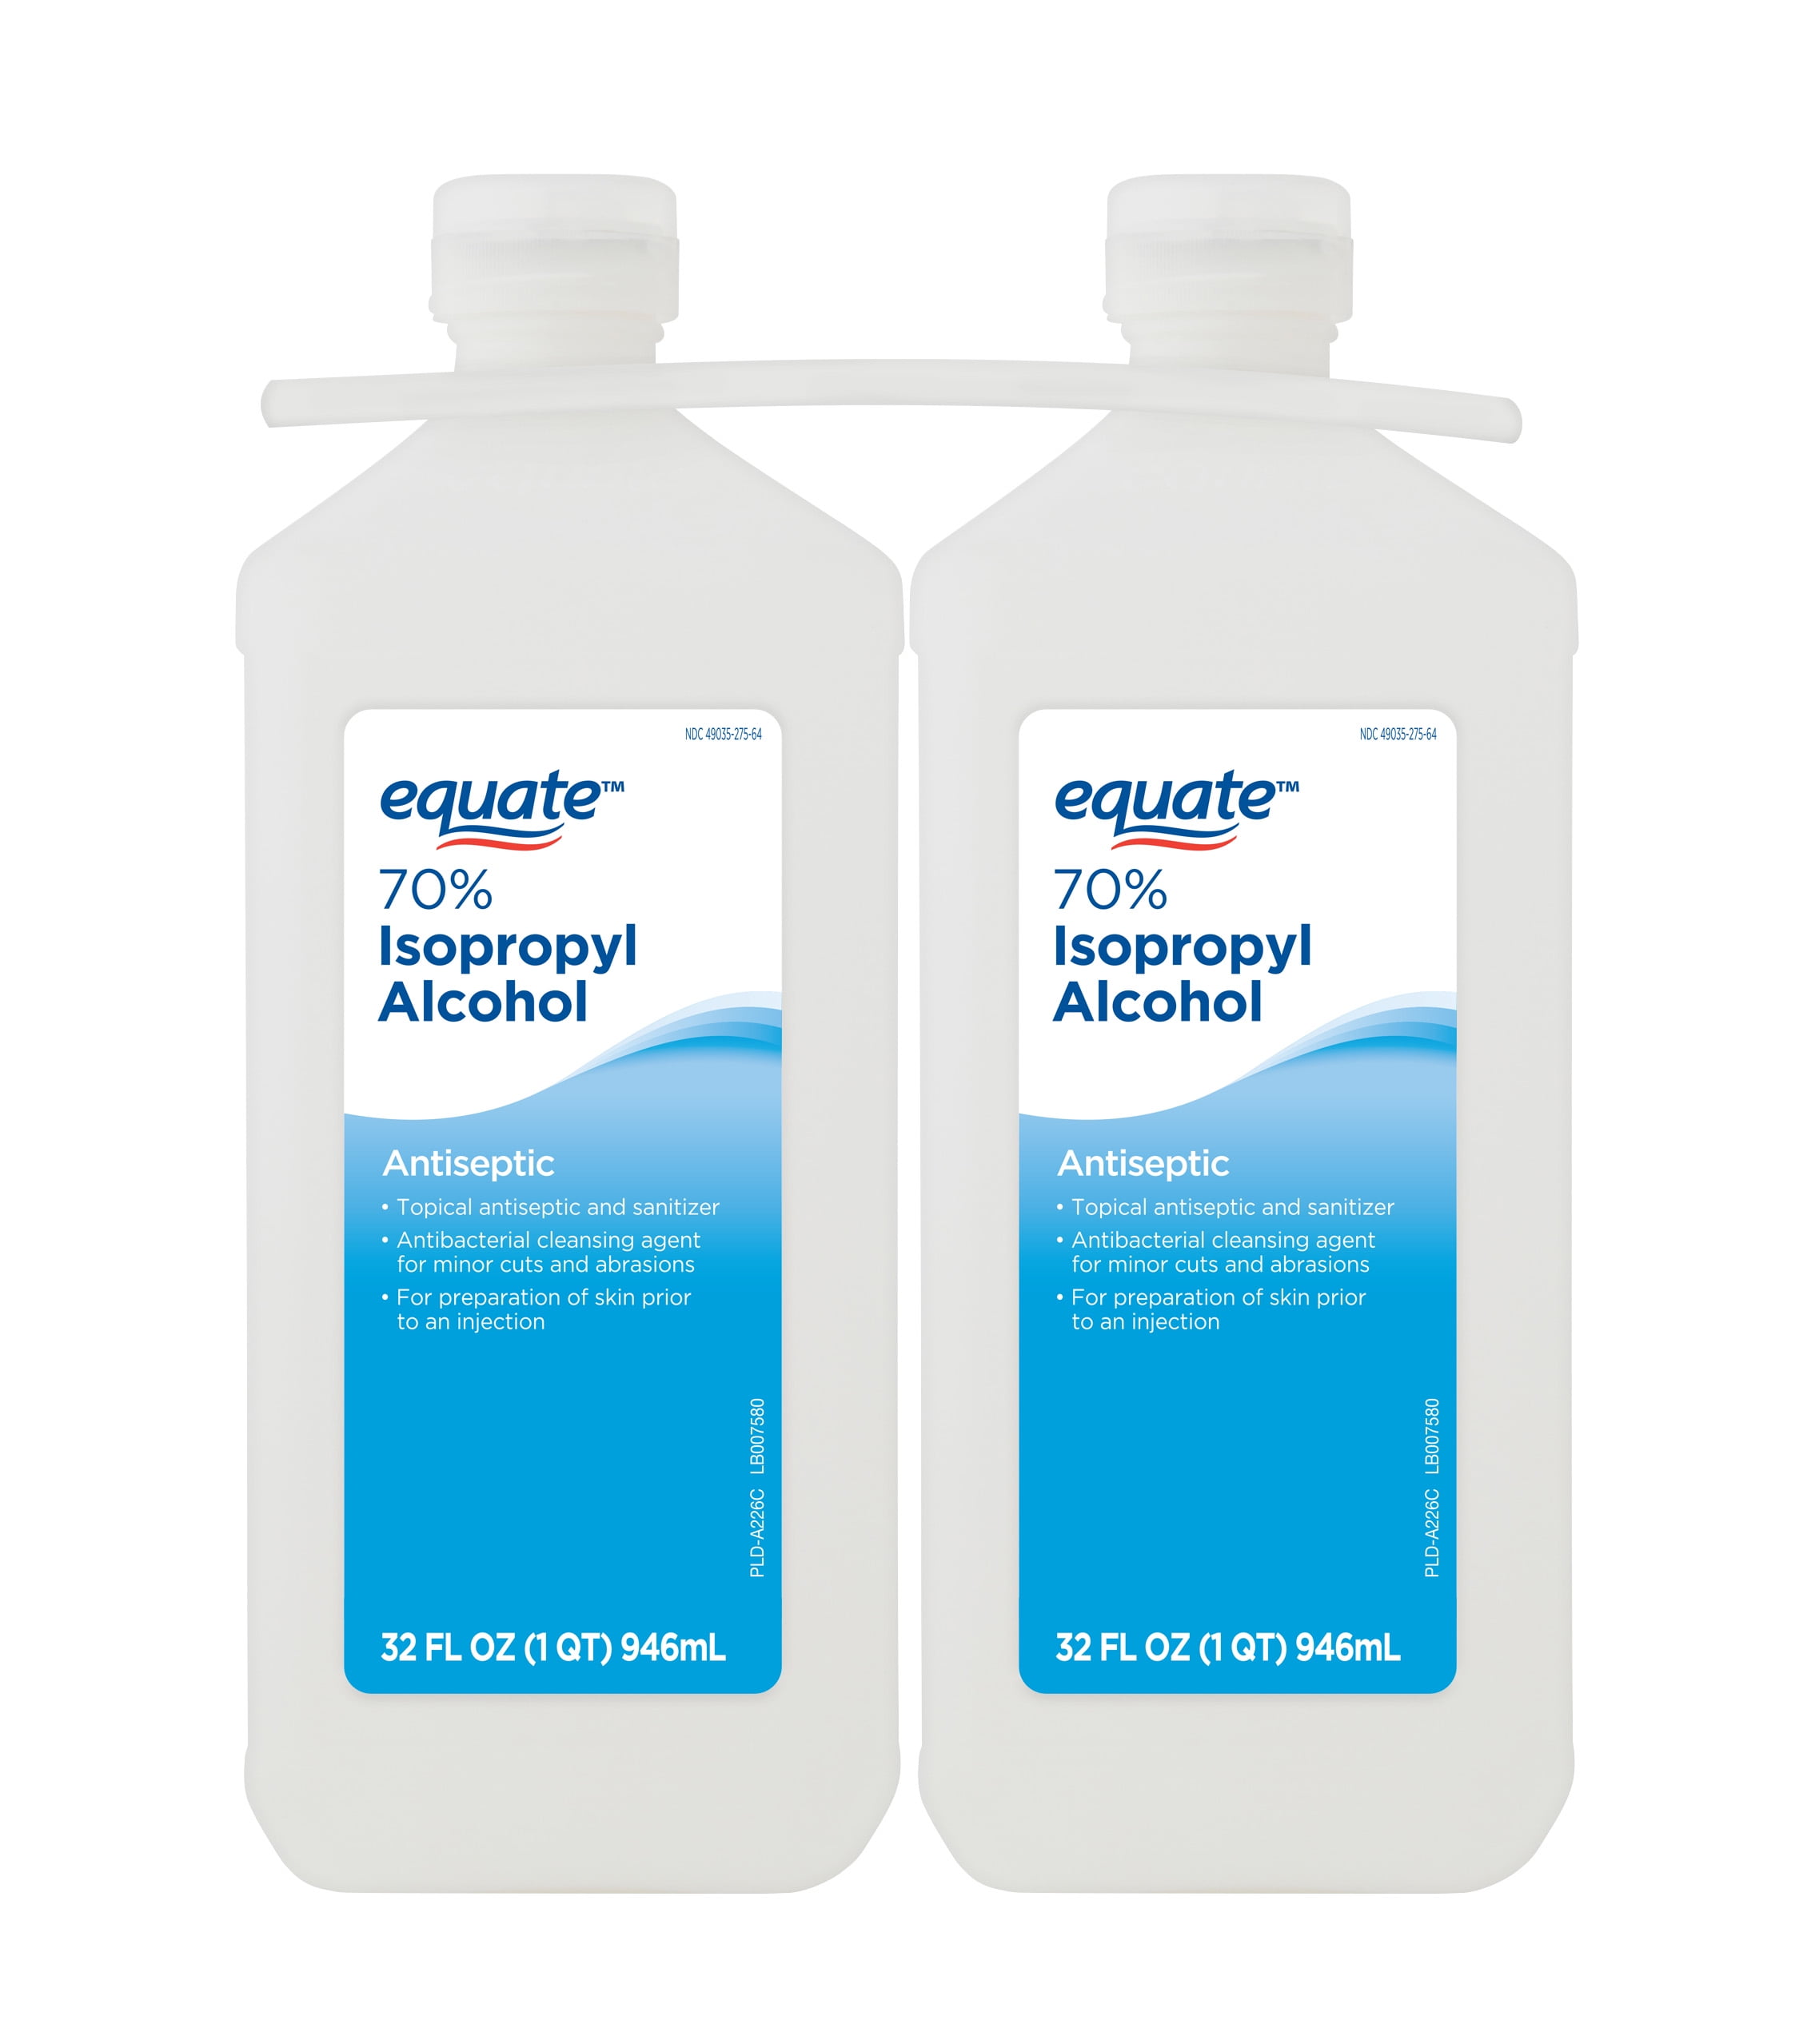 Equate 91% Isopropyl Alcohol Antiseptic Liquid, 6 PACK, (6 x 32 fl